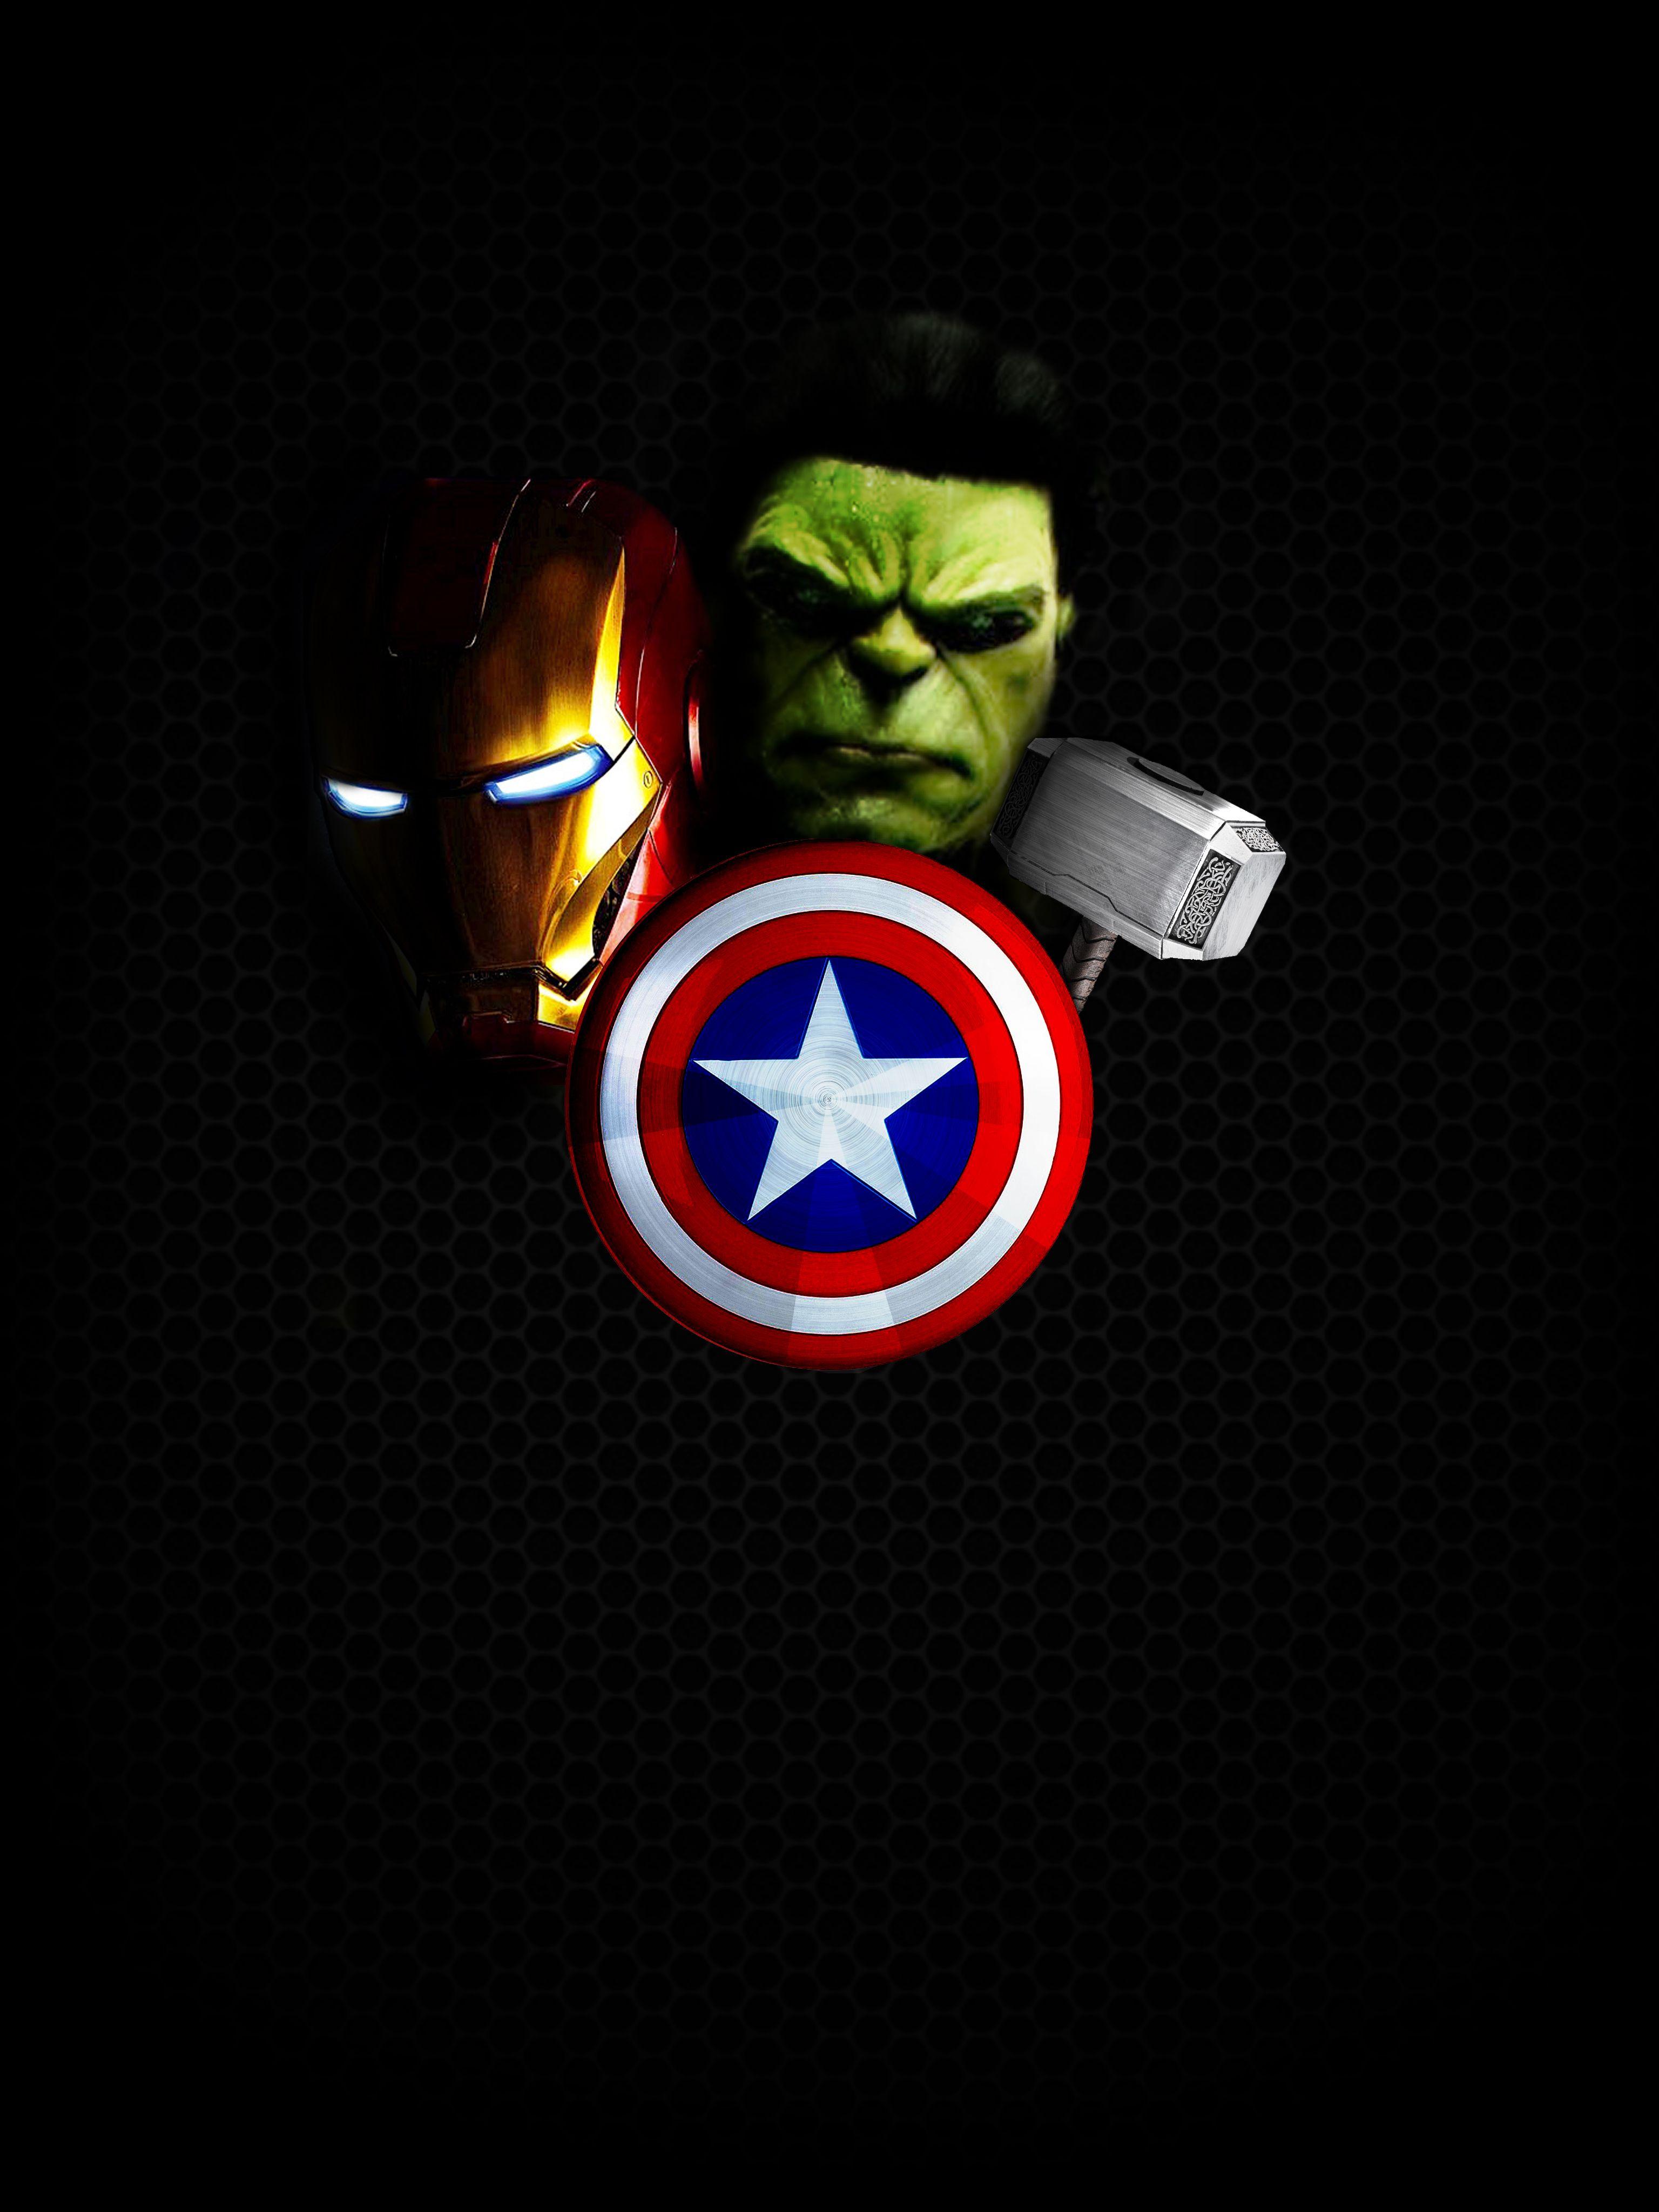 40 Gambar Avengers Logo Android Wallpaper Hd terbaru 2020